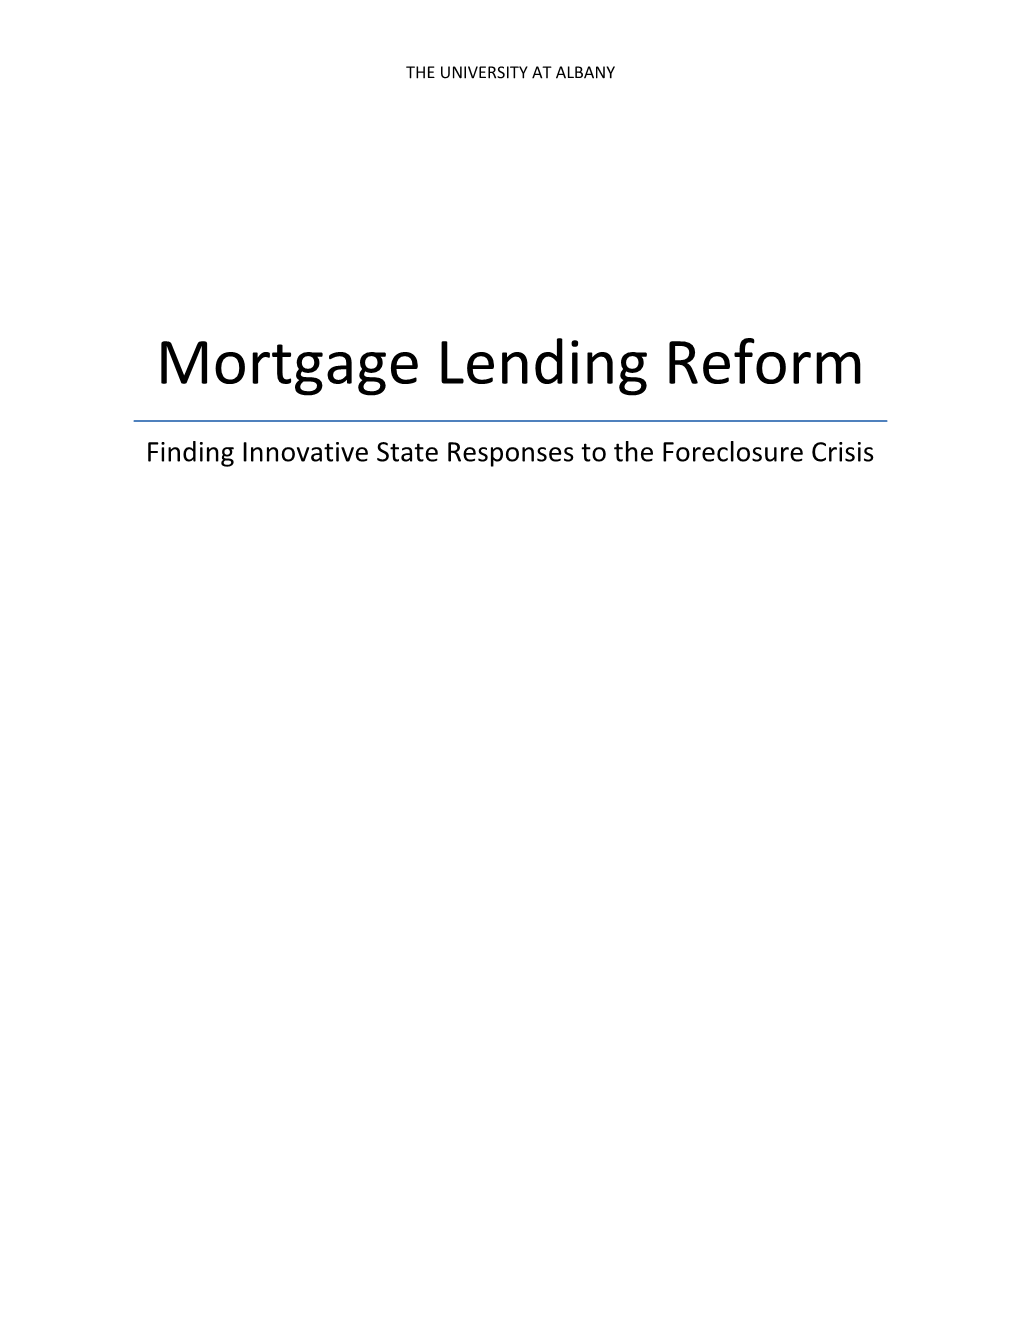 Mortgage Lending Reform